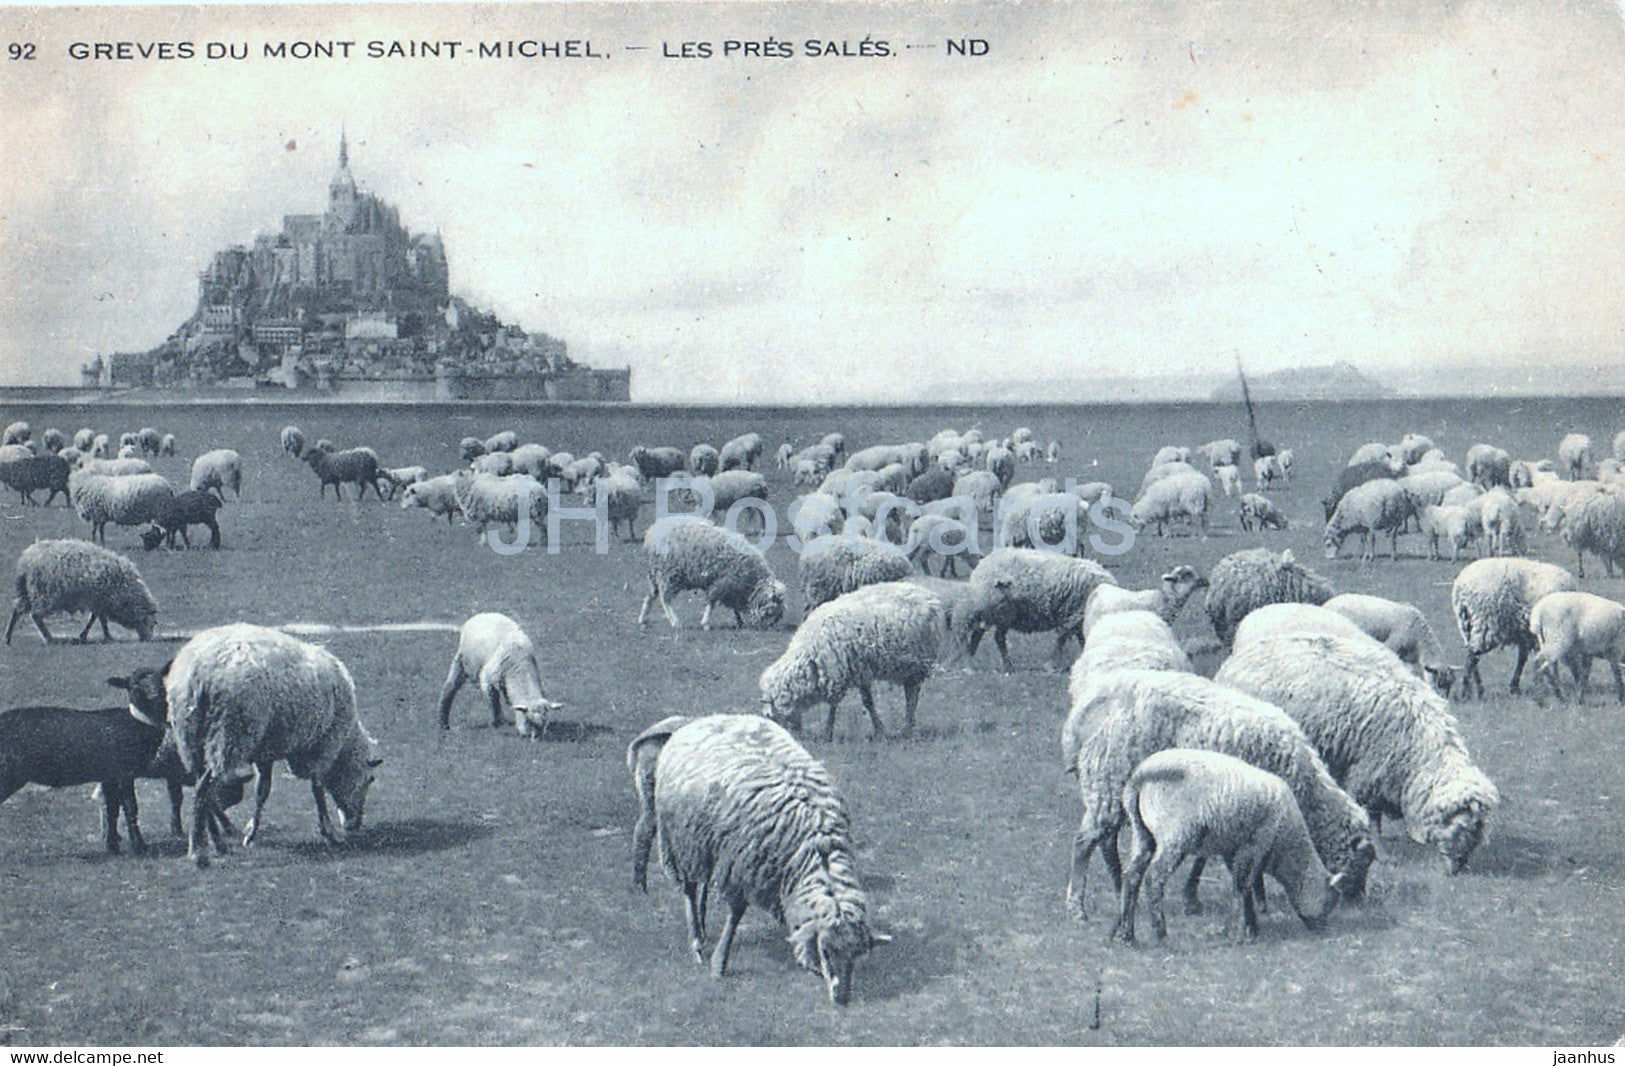 Greves du Mont Saint Michel - Les Pres Sales - ND - sheep - old postcard - France - unused - JH Postcards